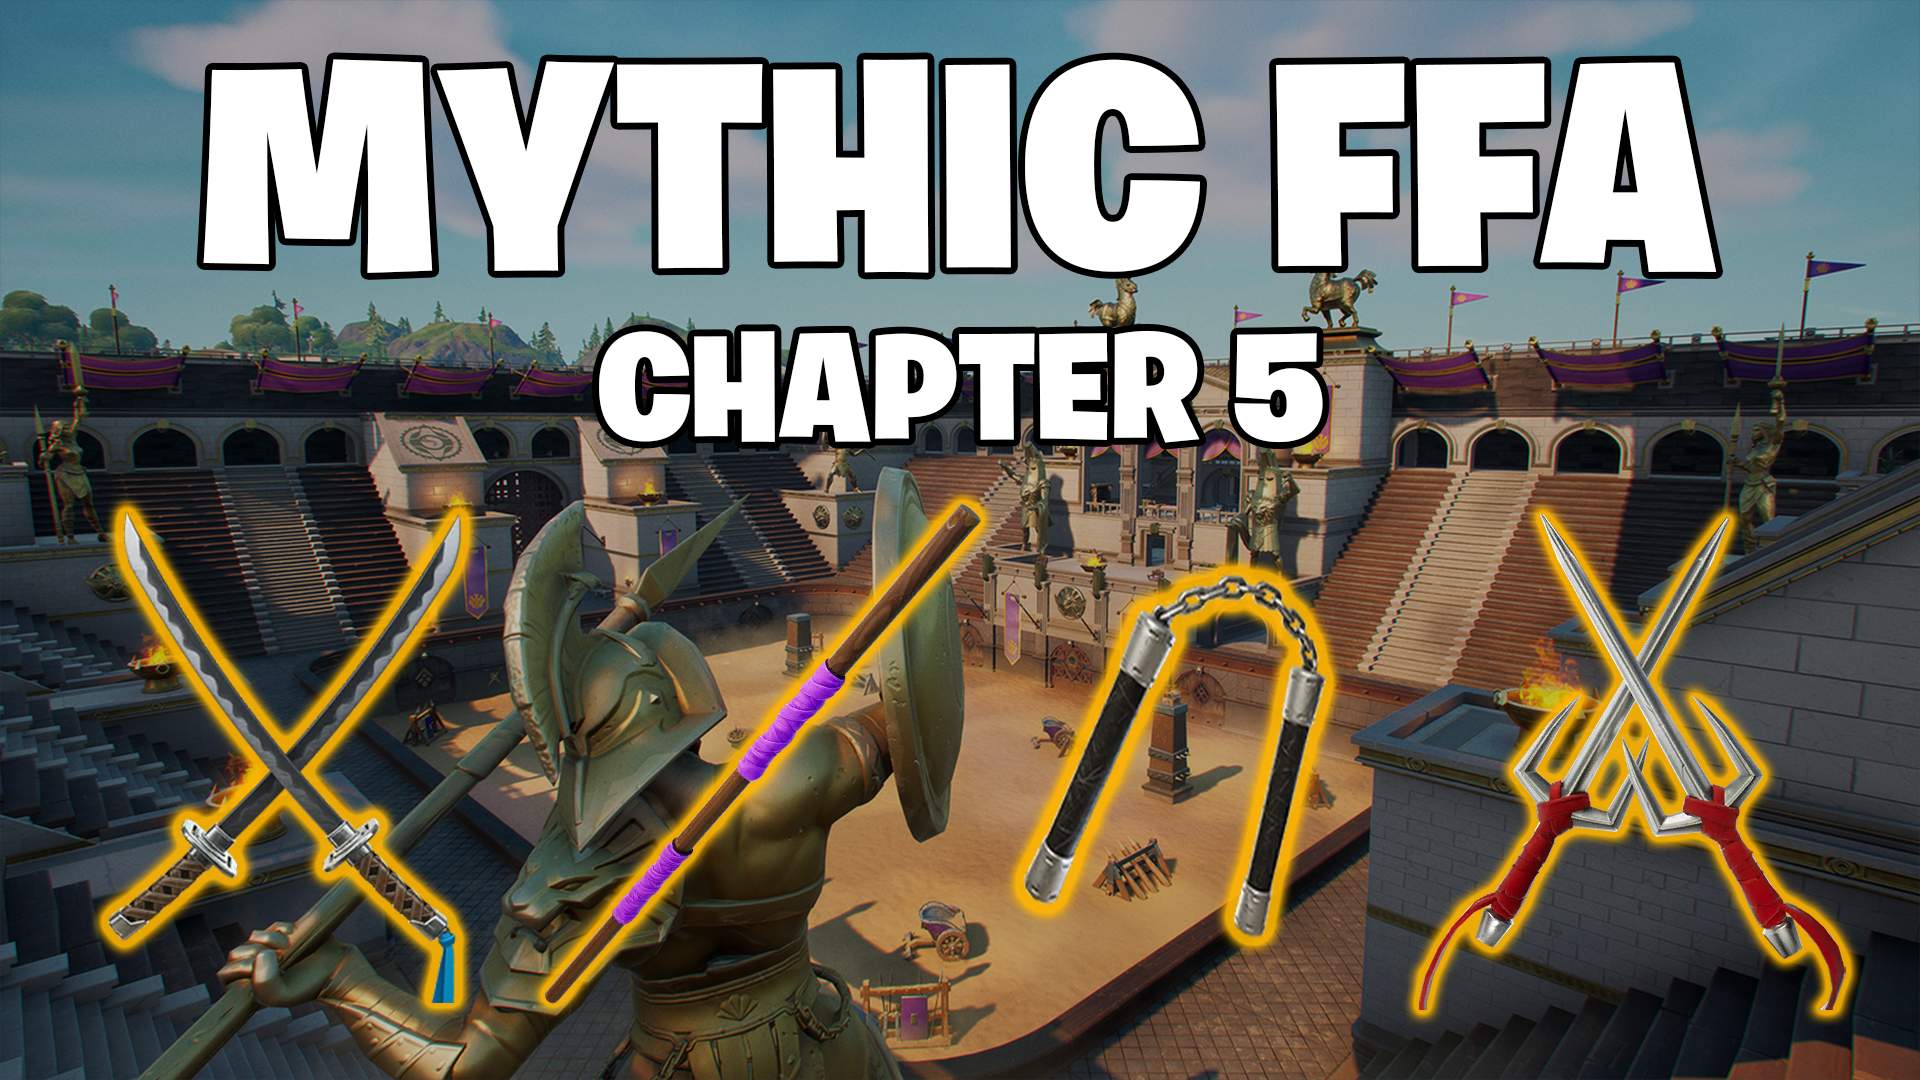 MYTHIC FFA CHAPTER 5